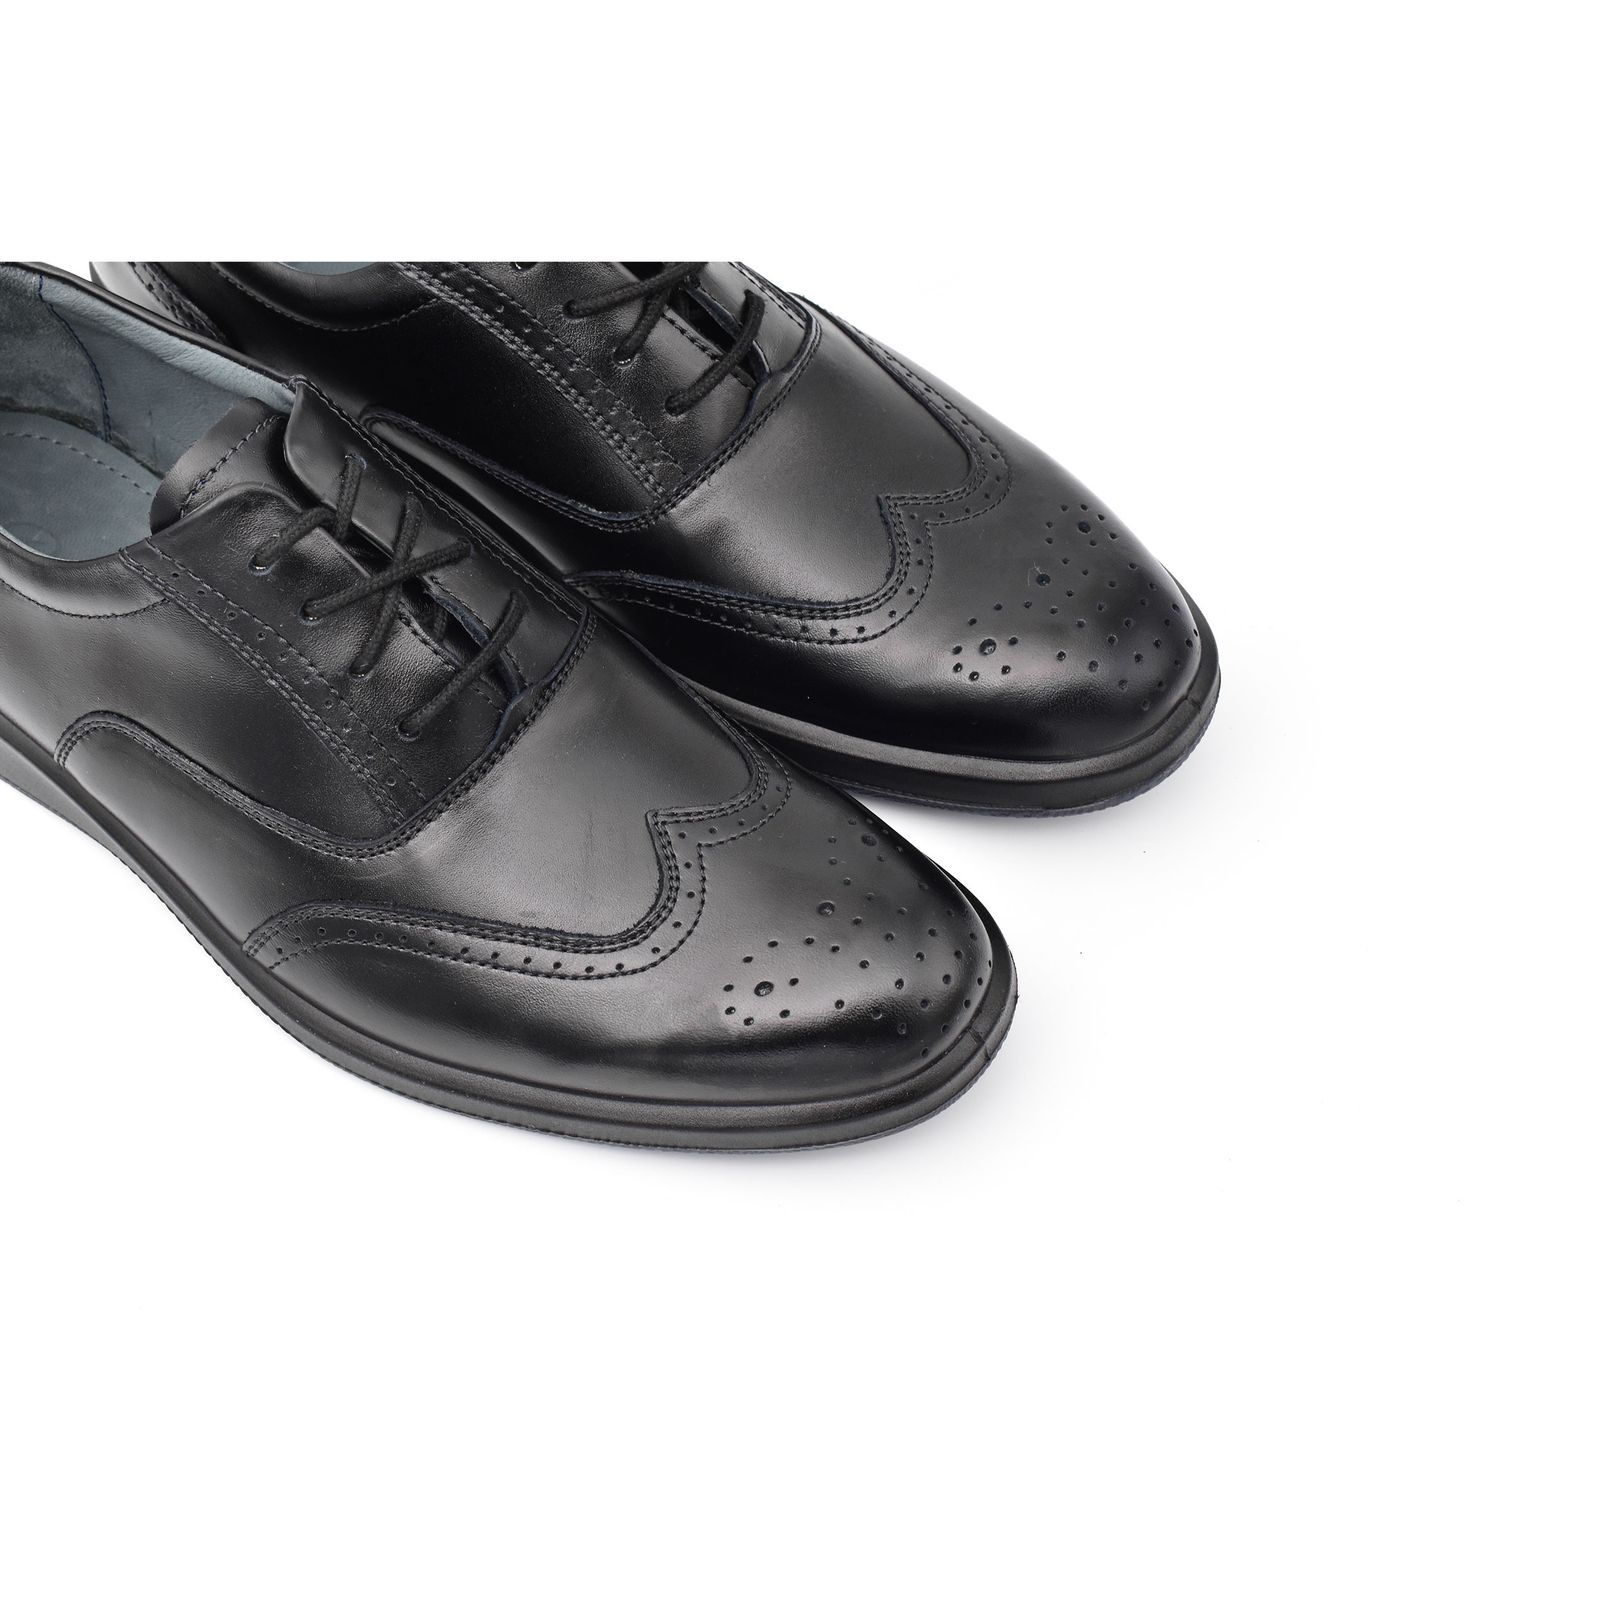 کفش روزمره مردانه پاما مدل F0 کد G1125 -  - 3